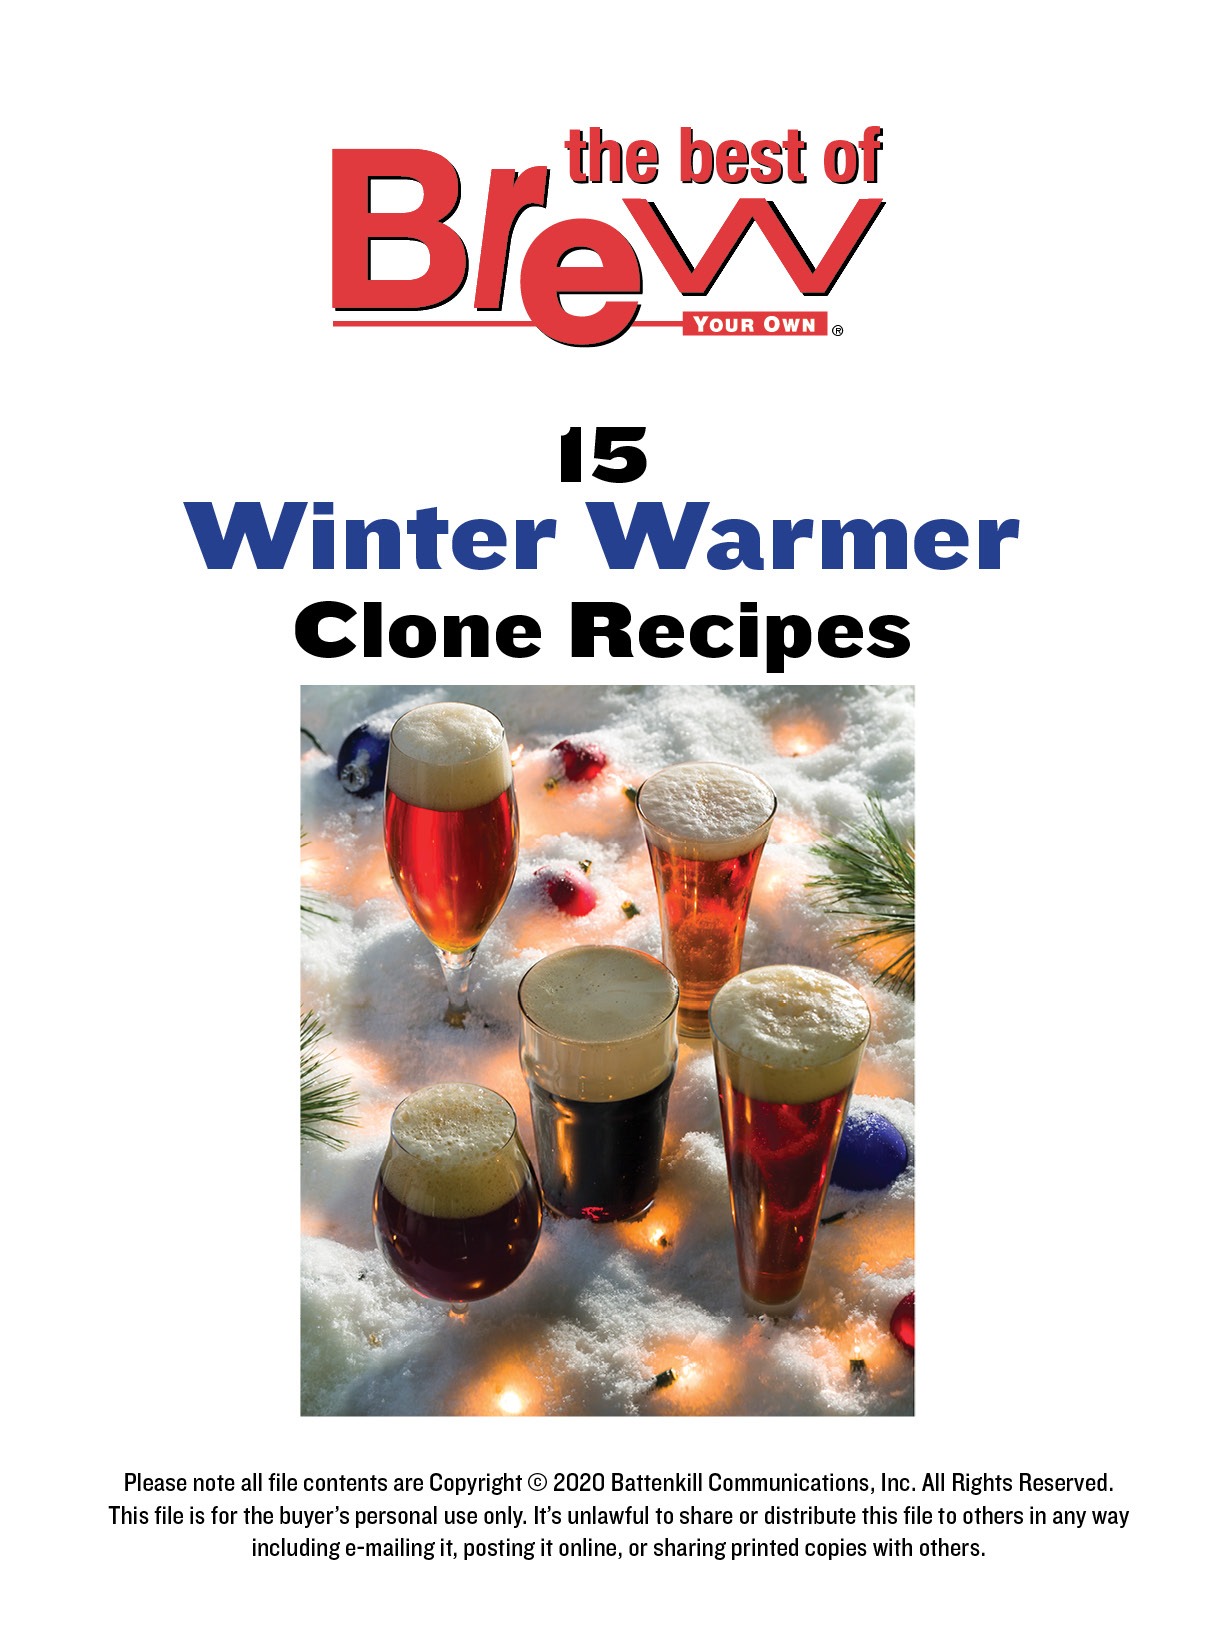 15 Classic Winter Warmer Clone Recipes